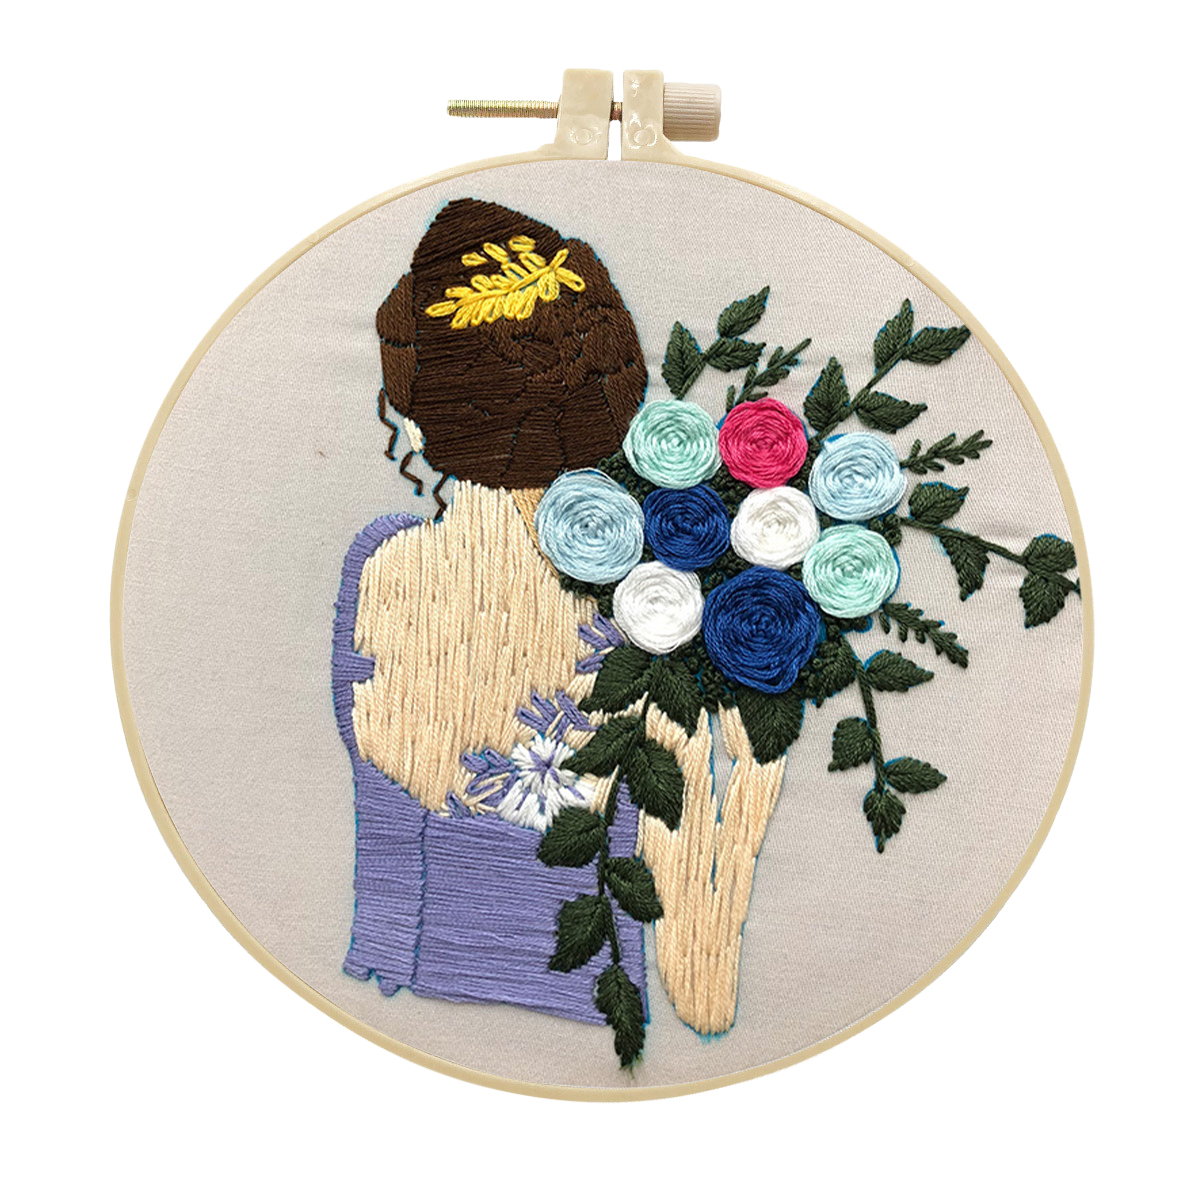 DIY Handmade Embroidery Kit Craft Cross Stitch Kits Beginner - Girl Carrying Flowers Pattern